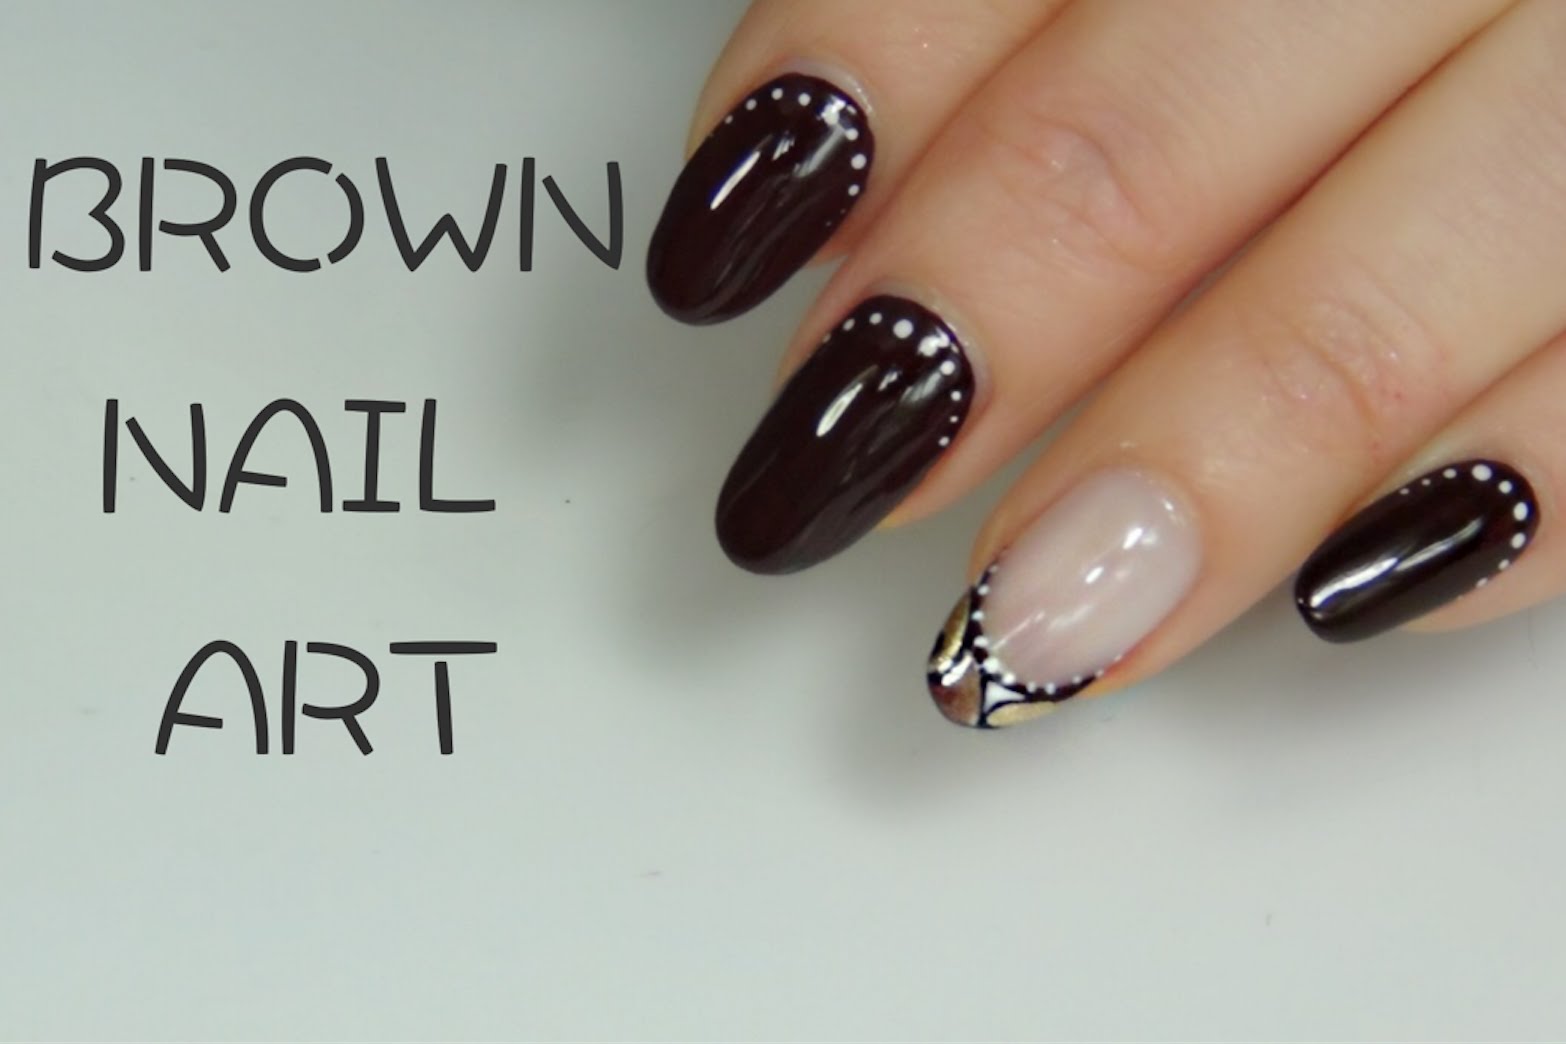 1. Brown Nail Art Designs - wide 8